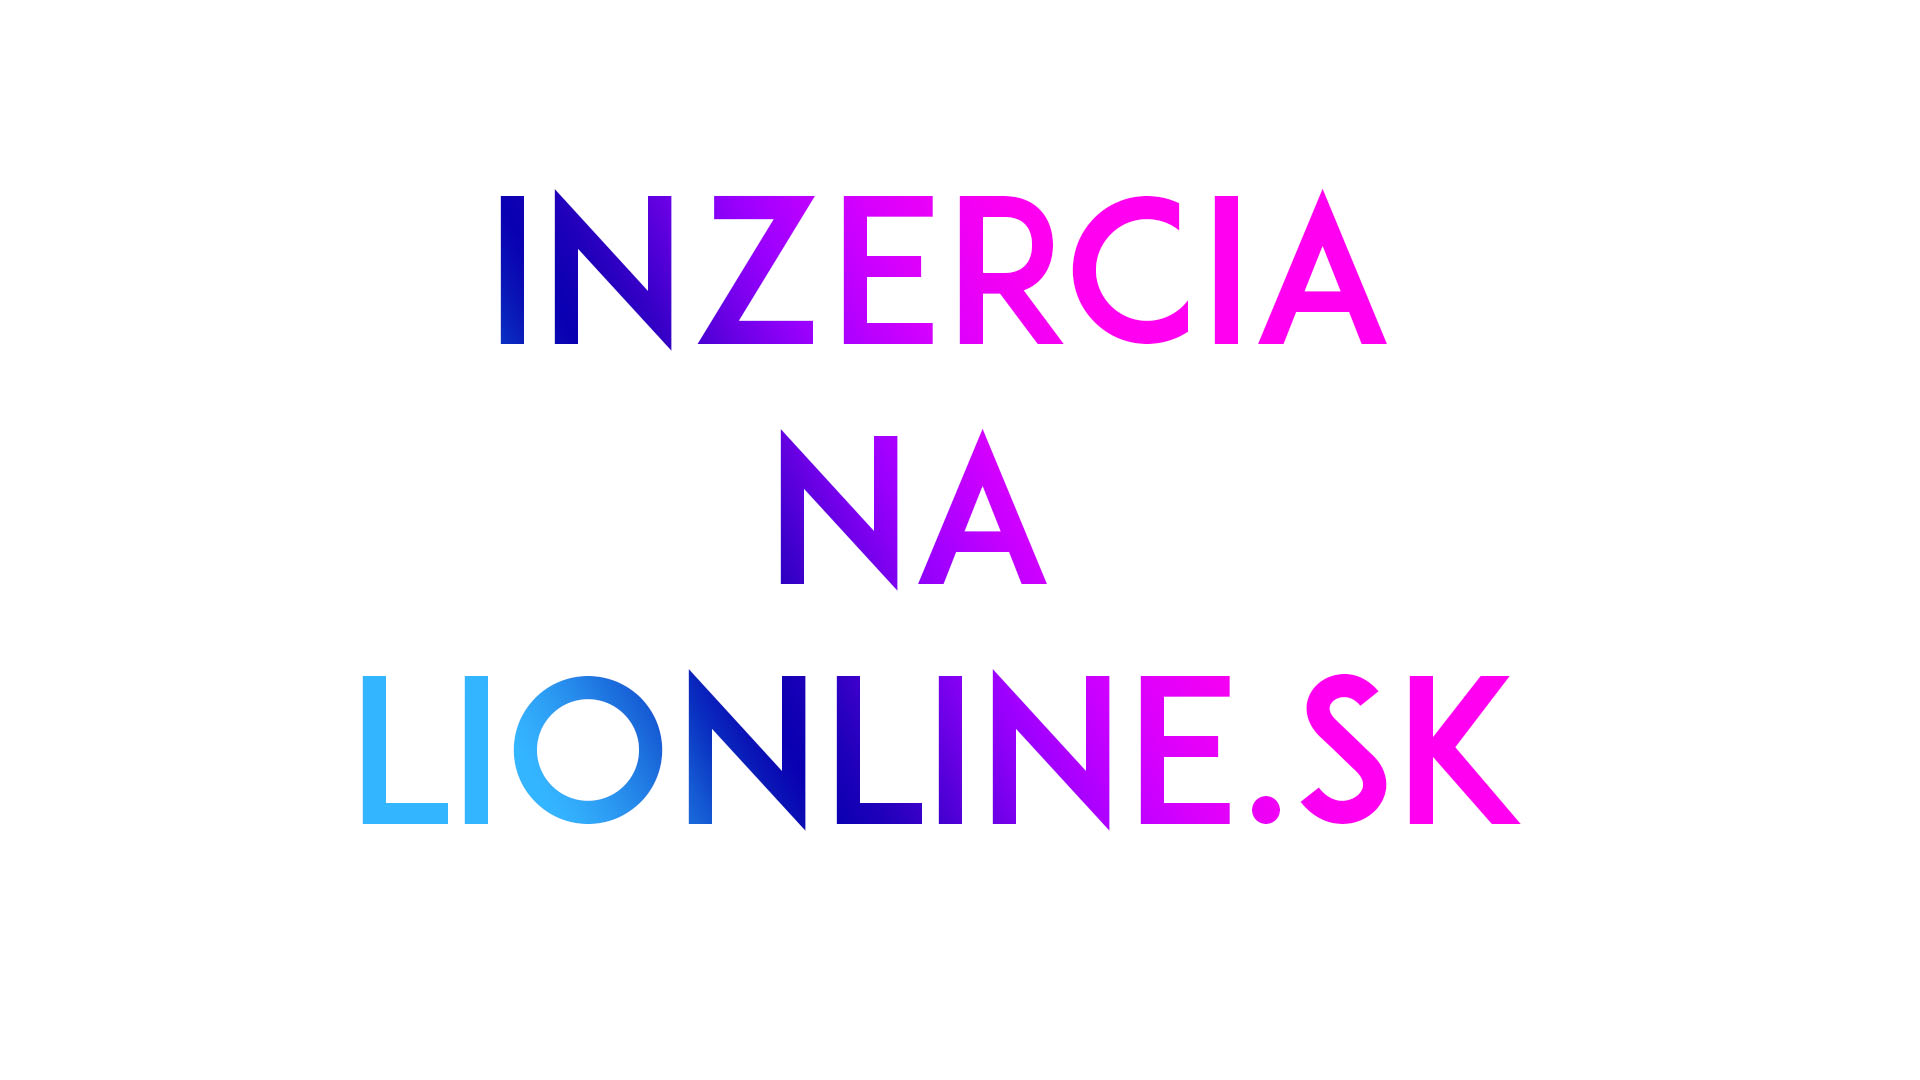 Inzercia na lionline.sk